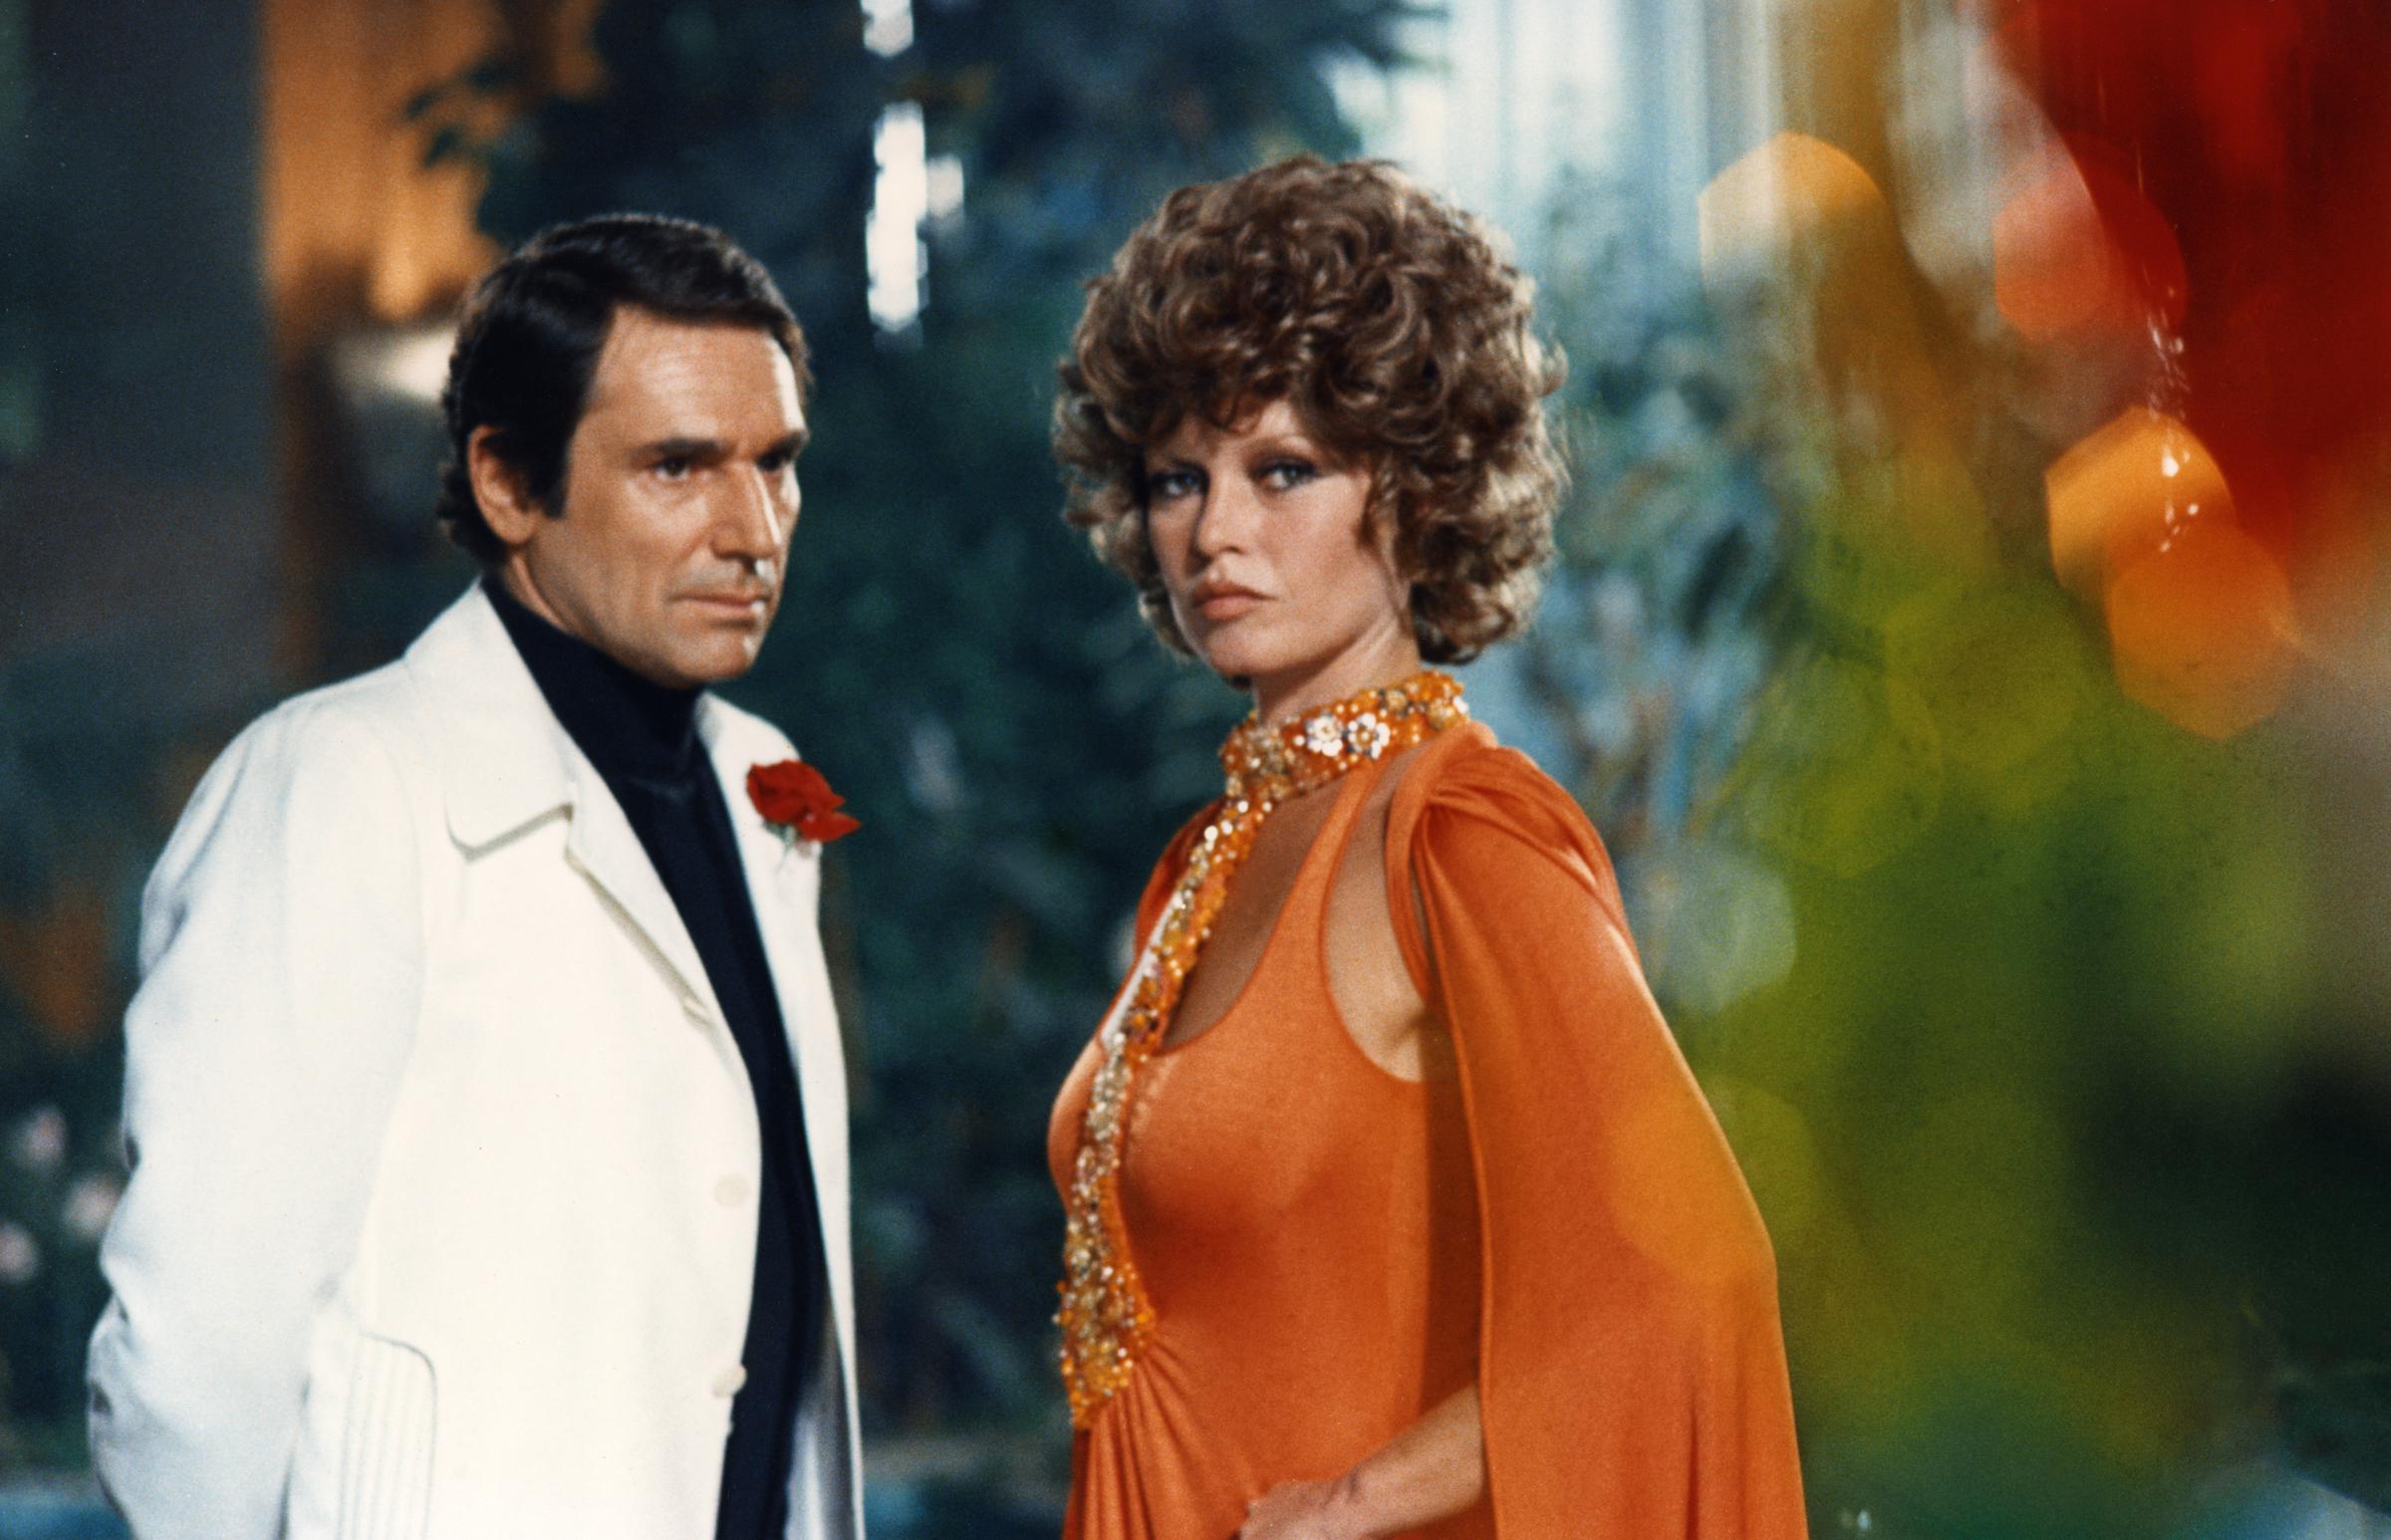 Robert Hossein y Brigitte Bardot en el plató de "Don Juan ou Si Don Juan était une femme" el 1 de enero de 1973. | Fuente: Getty Images